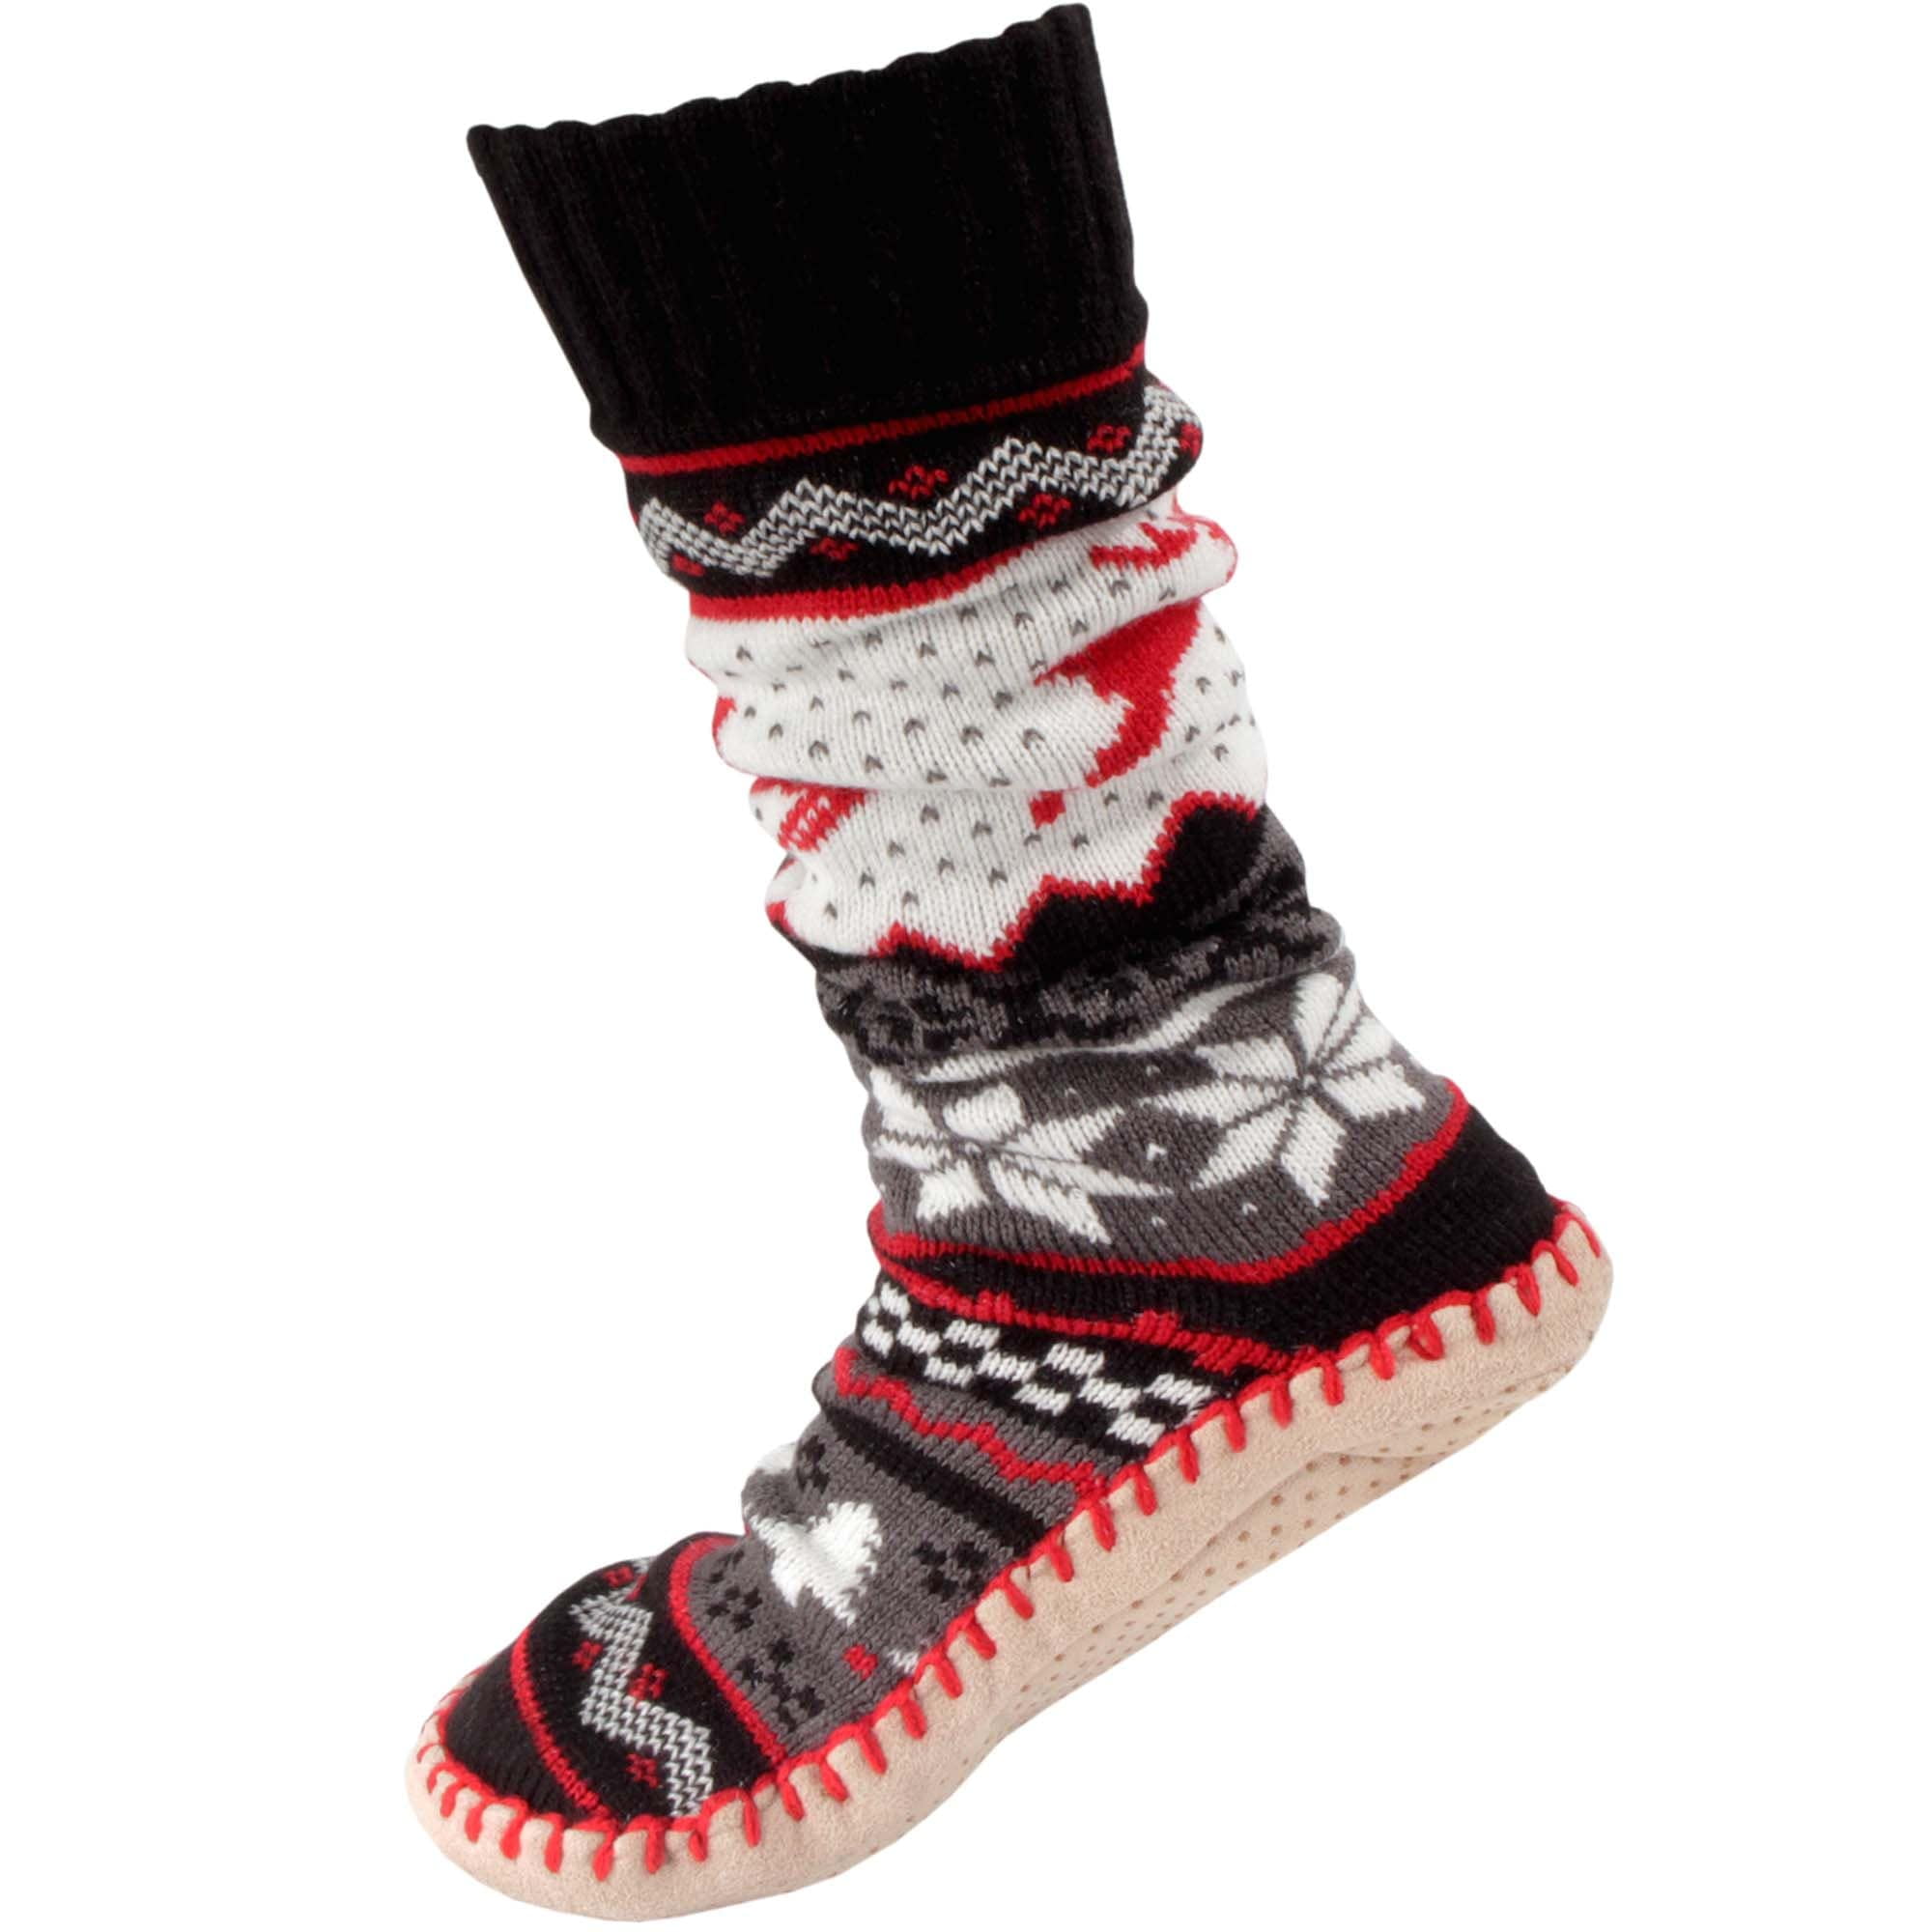 Men's Soft Fuzzy Furry Gripper Slipper Socks - Red Reindeer - S/M - 1 ...